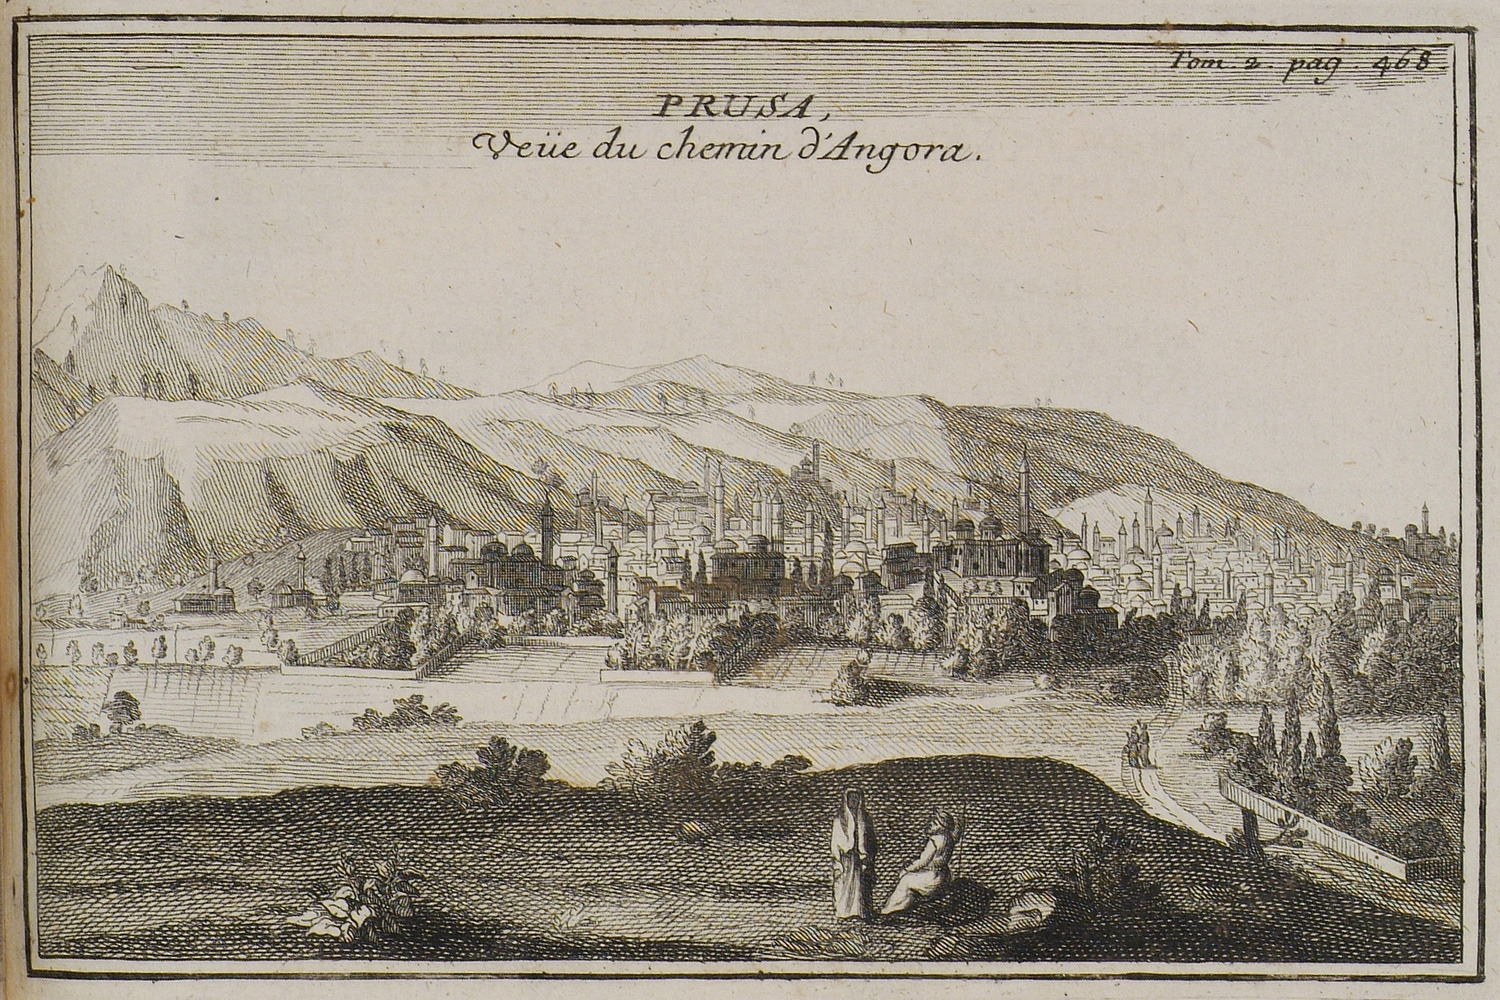 Bursa_Prousa_Steal engraving_Joseph Pitton de Tournefort_published 1717